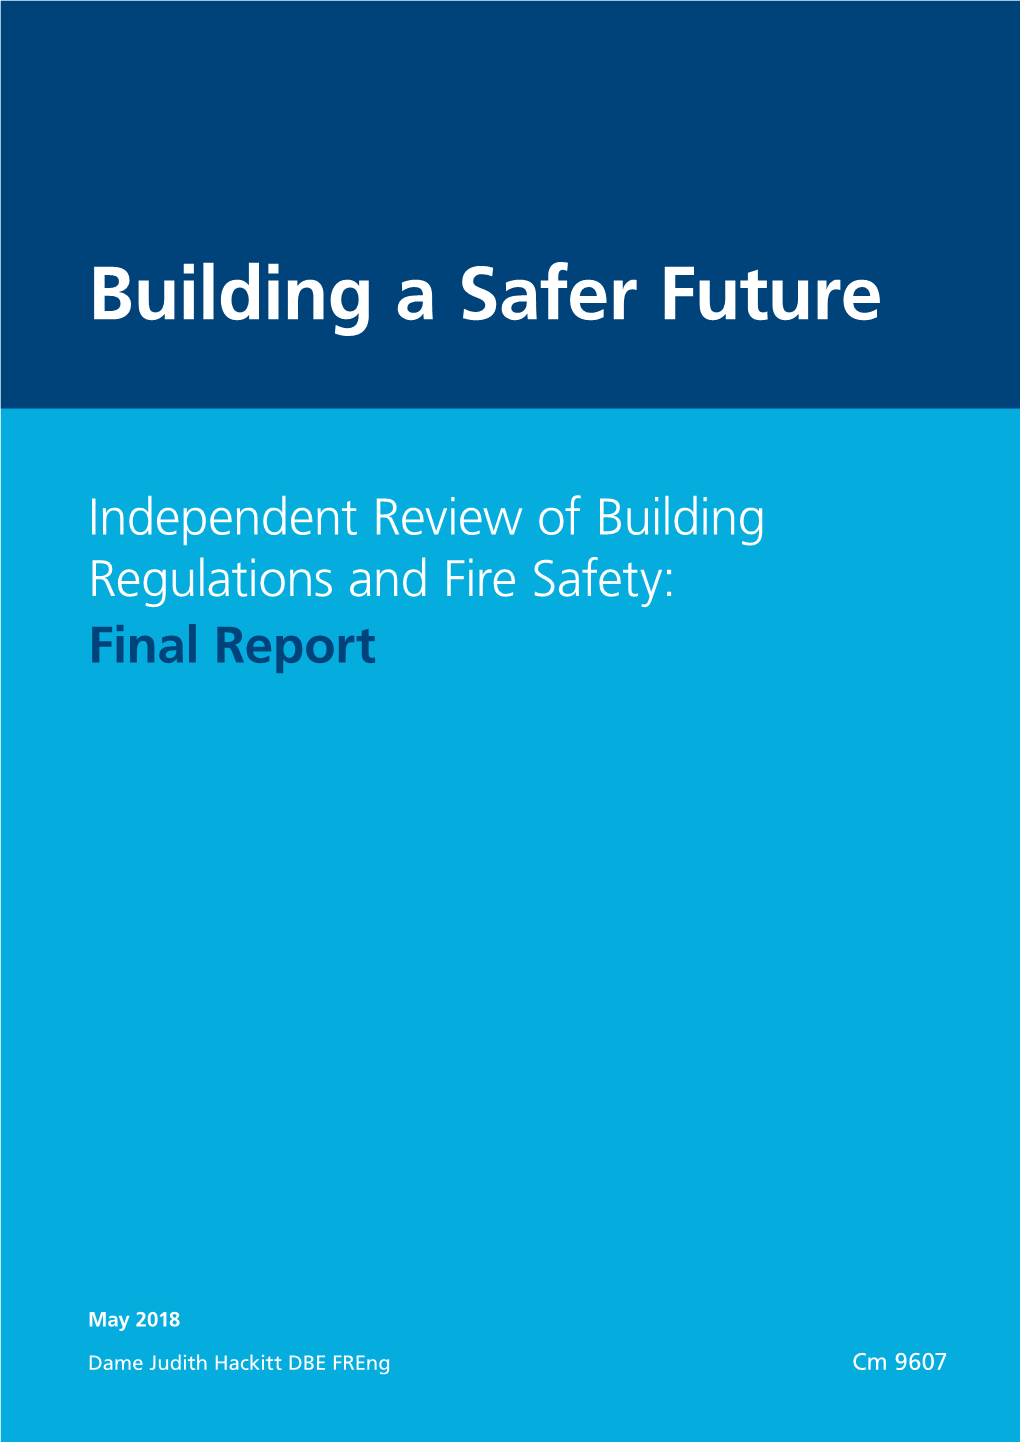 Building a Safer Future: Final Report